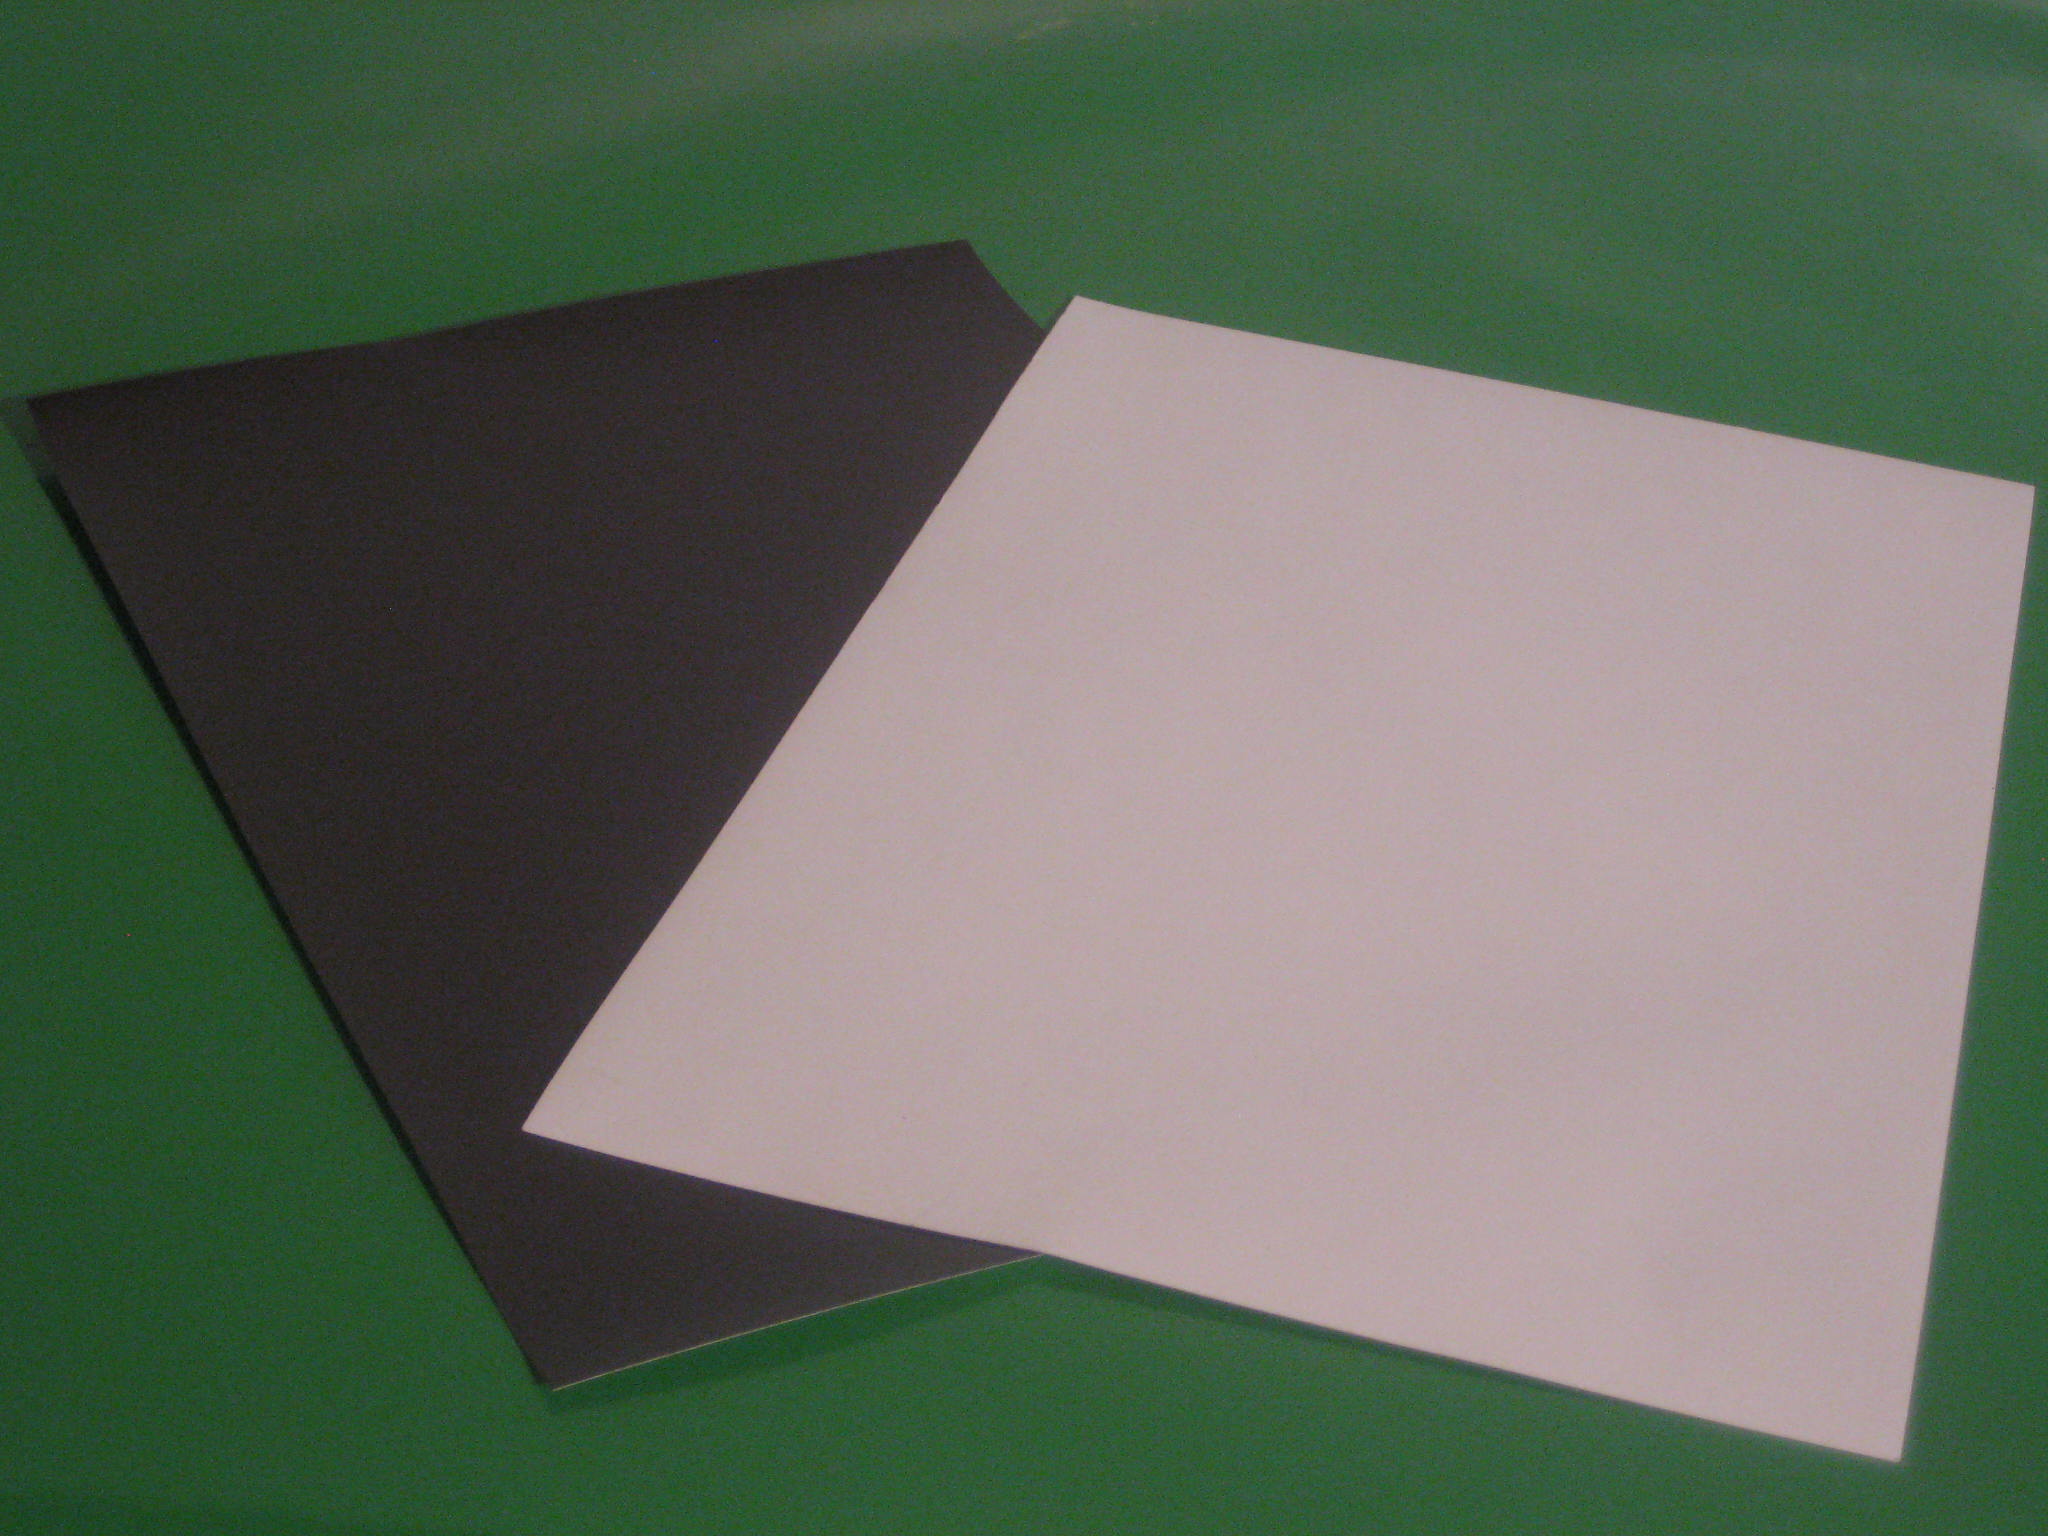 Stock #84354 - Clairjet - Magnetic Paper - Sheets & Envelopes